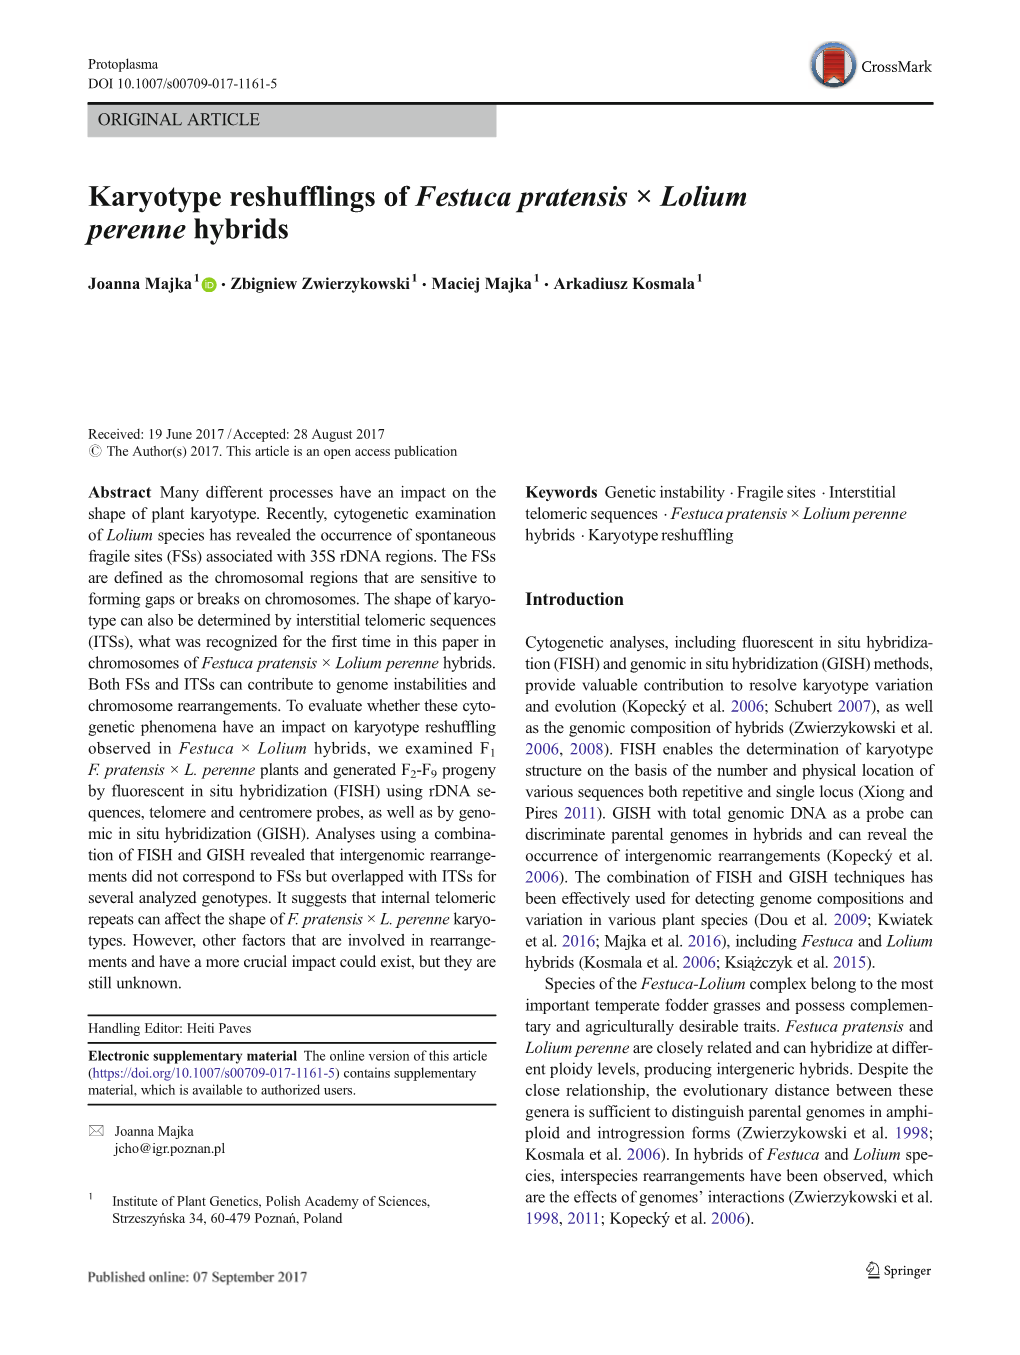 Karyotype Reshufflings of Festuca Pratensis × Lolium Perenne Hybrids